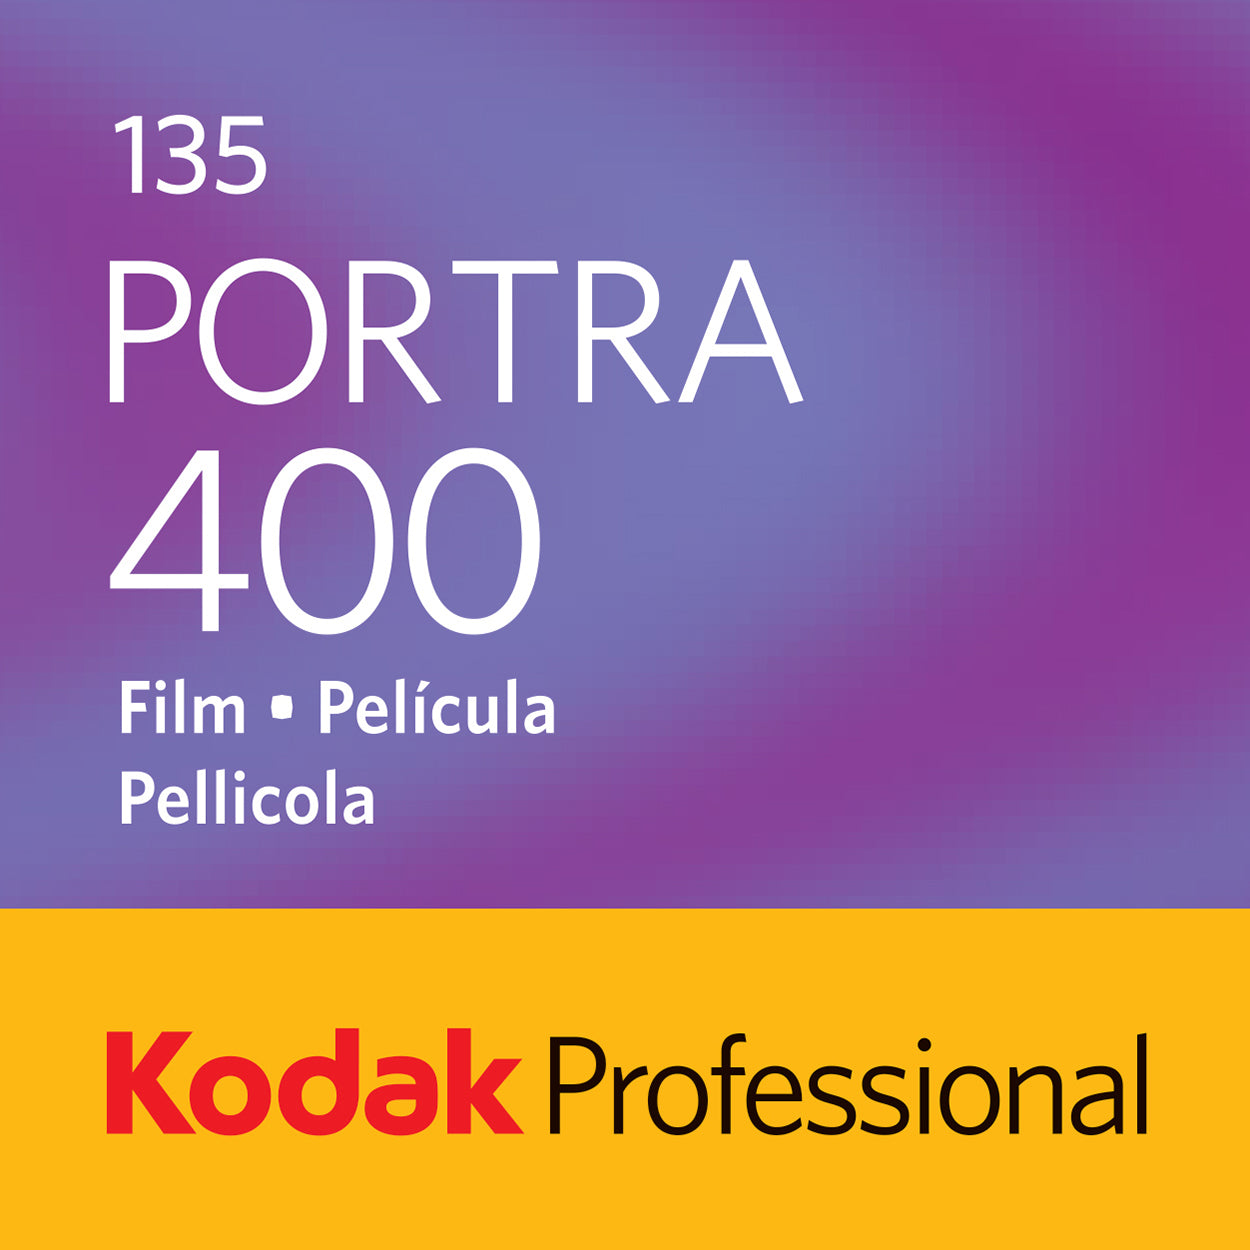 KODAK Portra 400